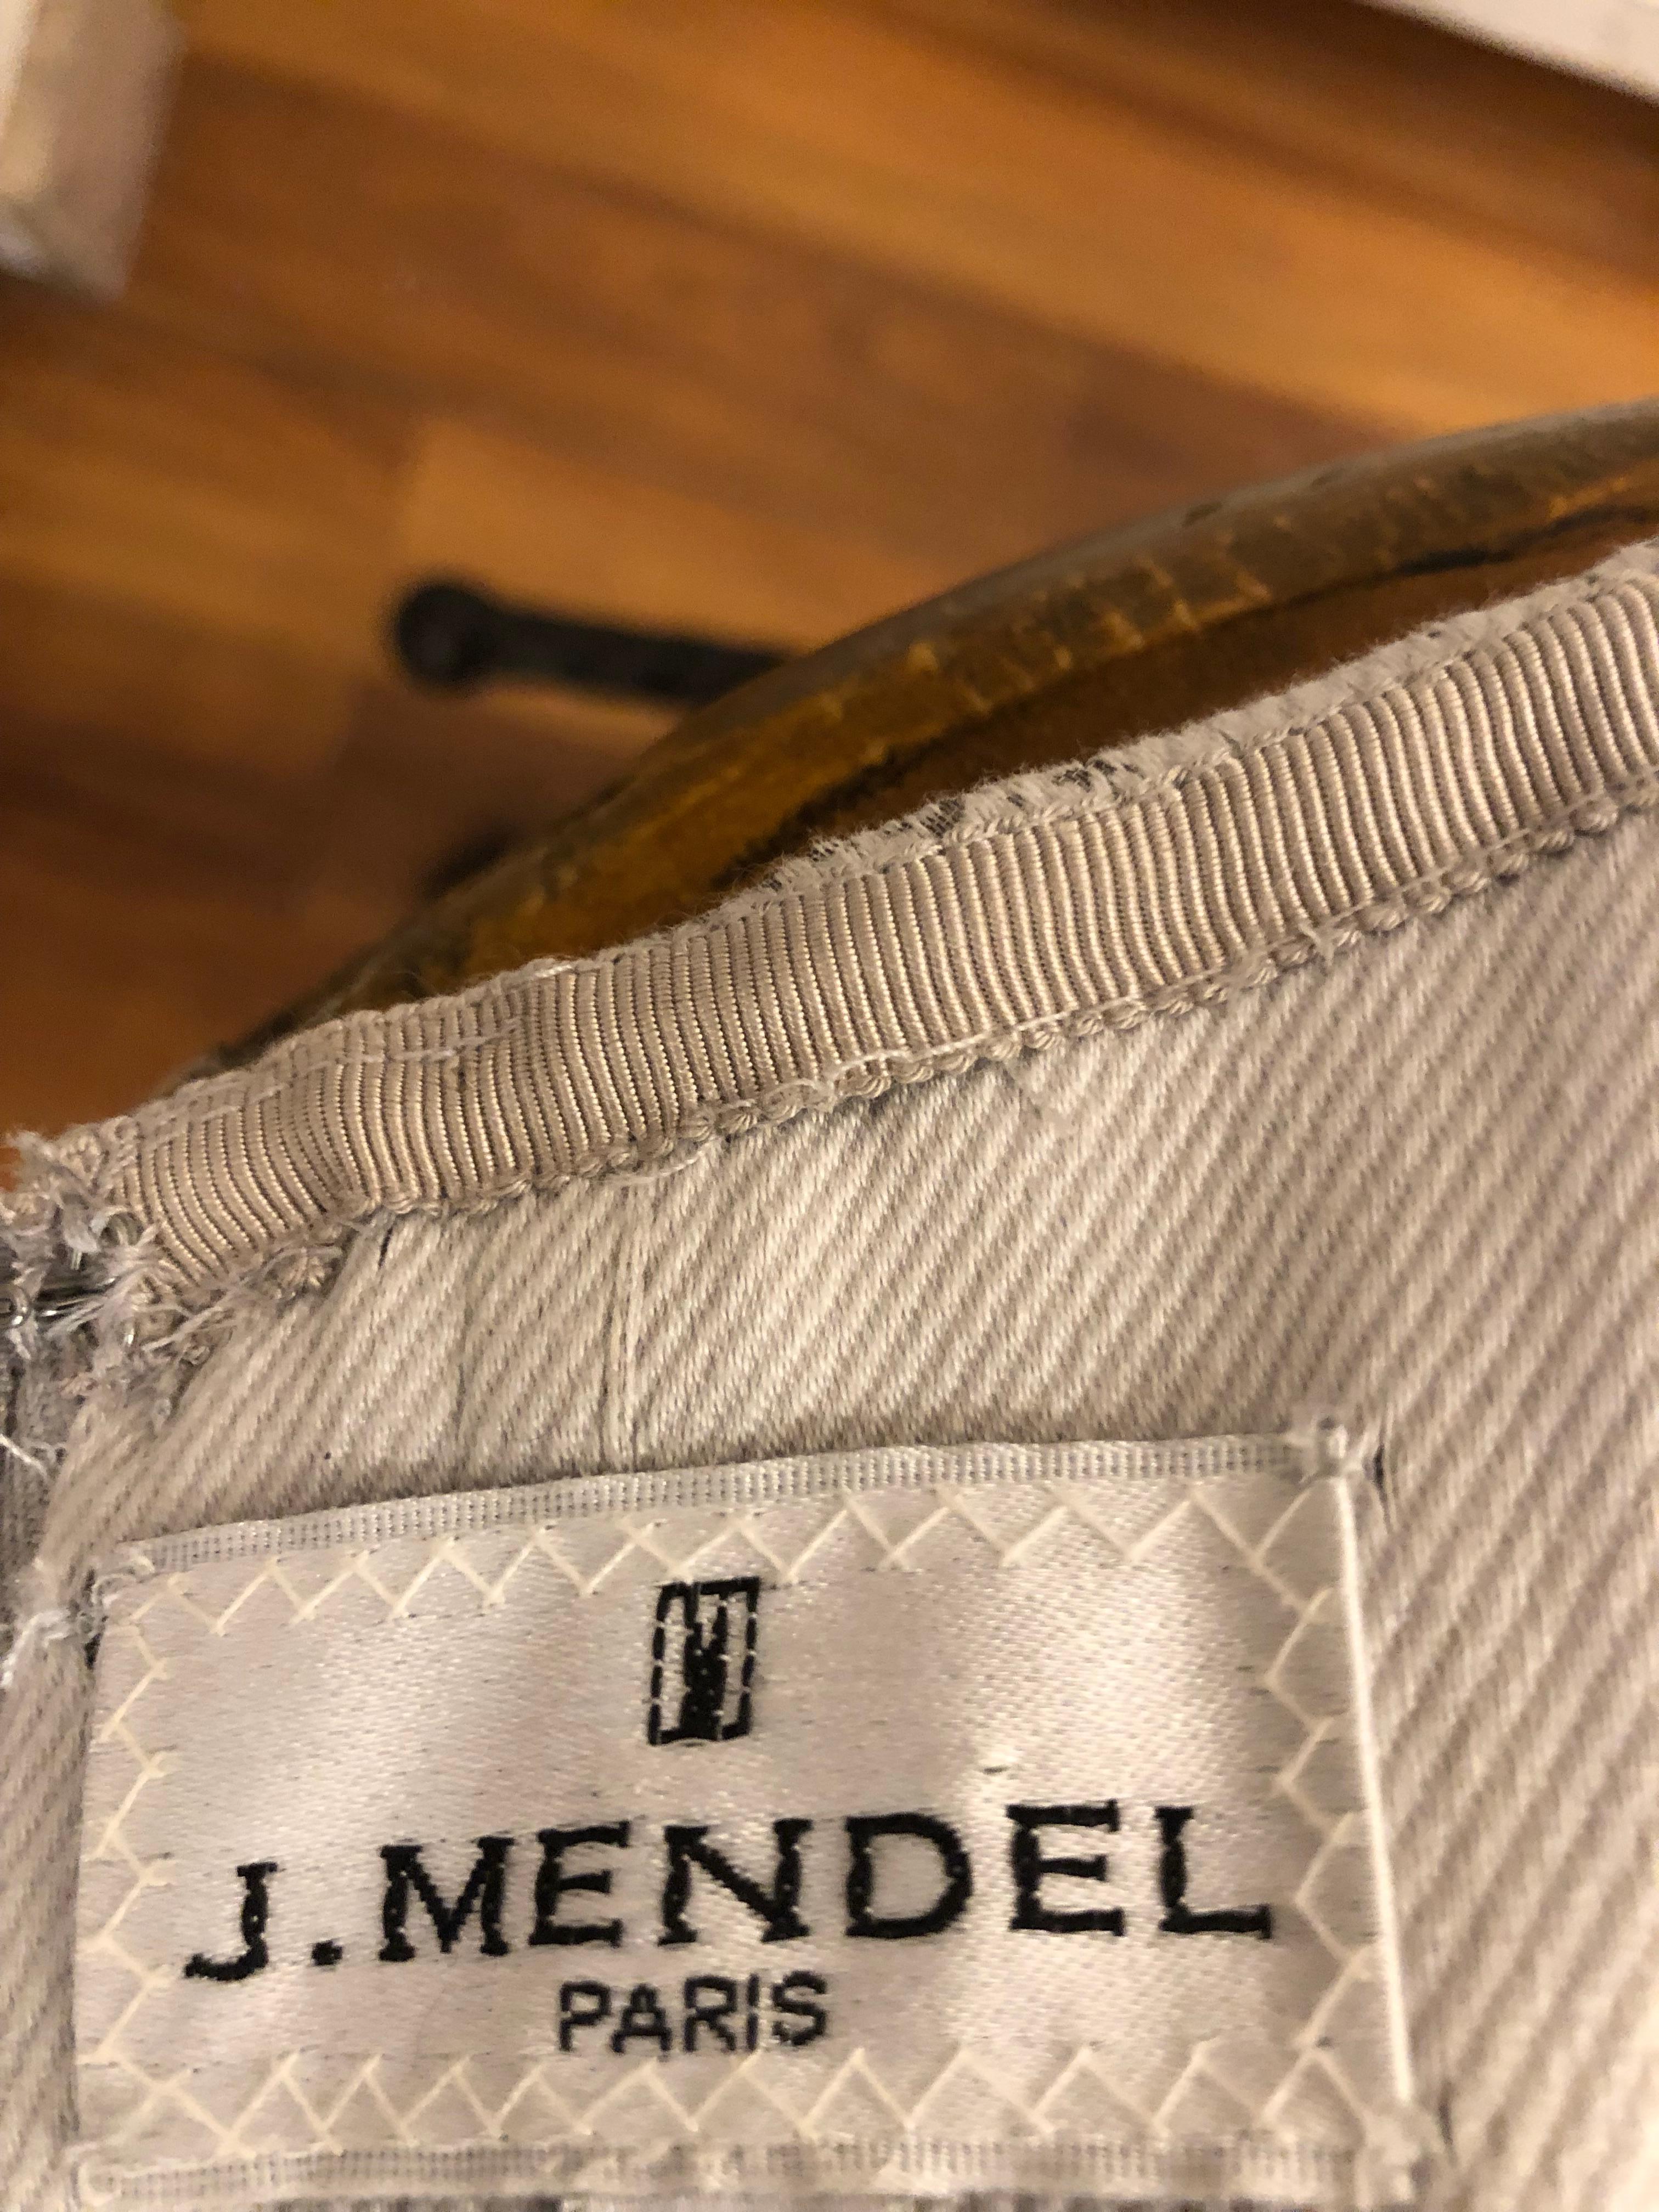 Stunning J. Mendel Paris Strapless Grey/Silver Dress (S) 1